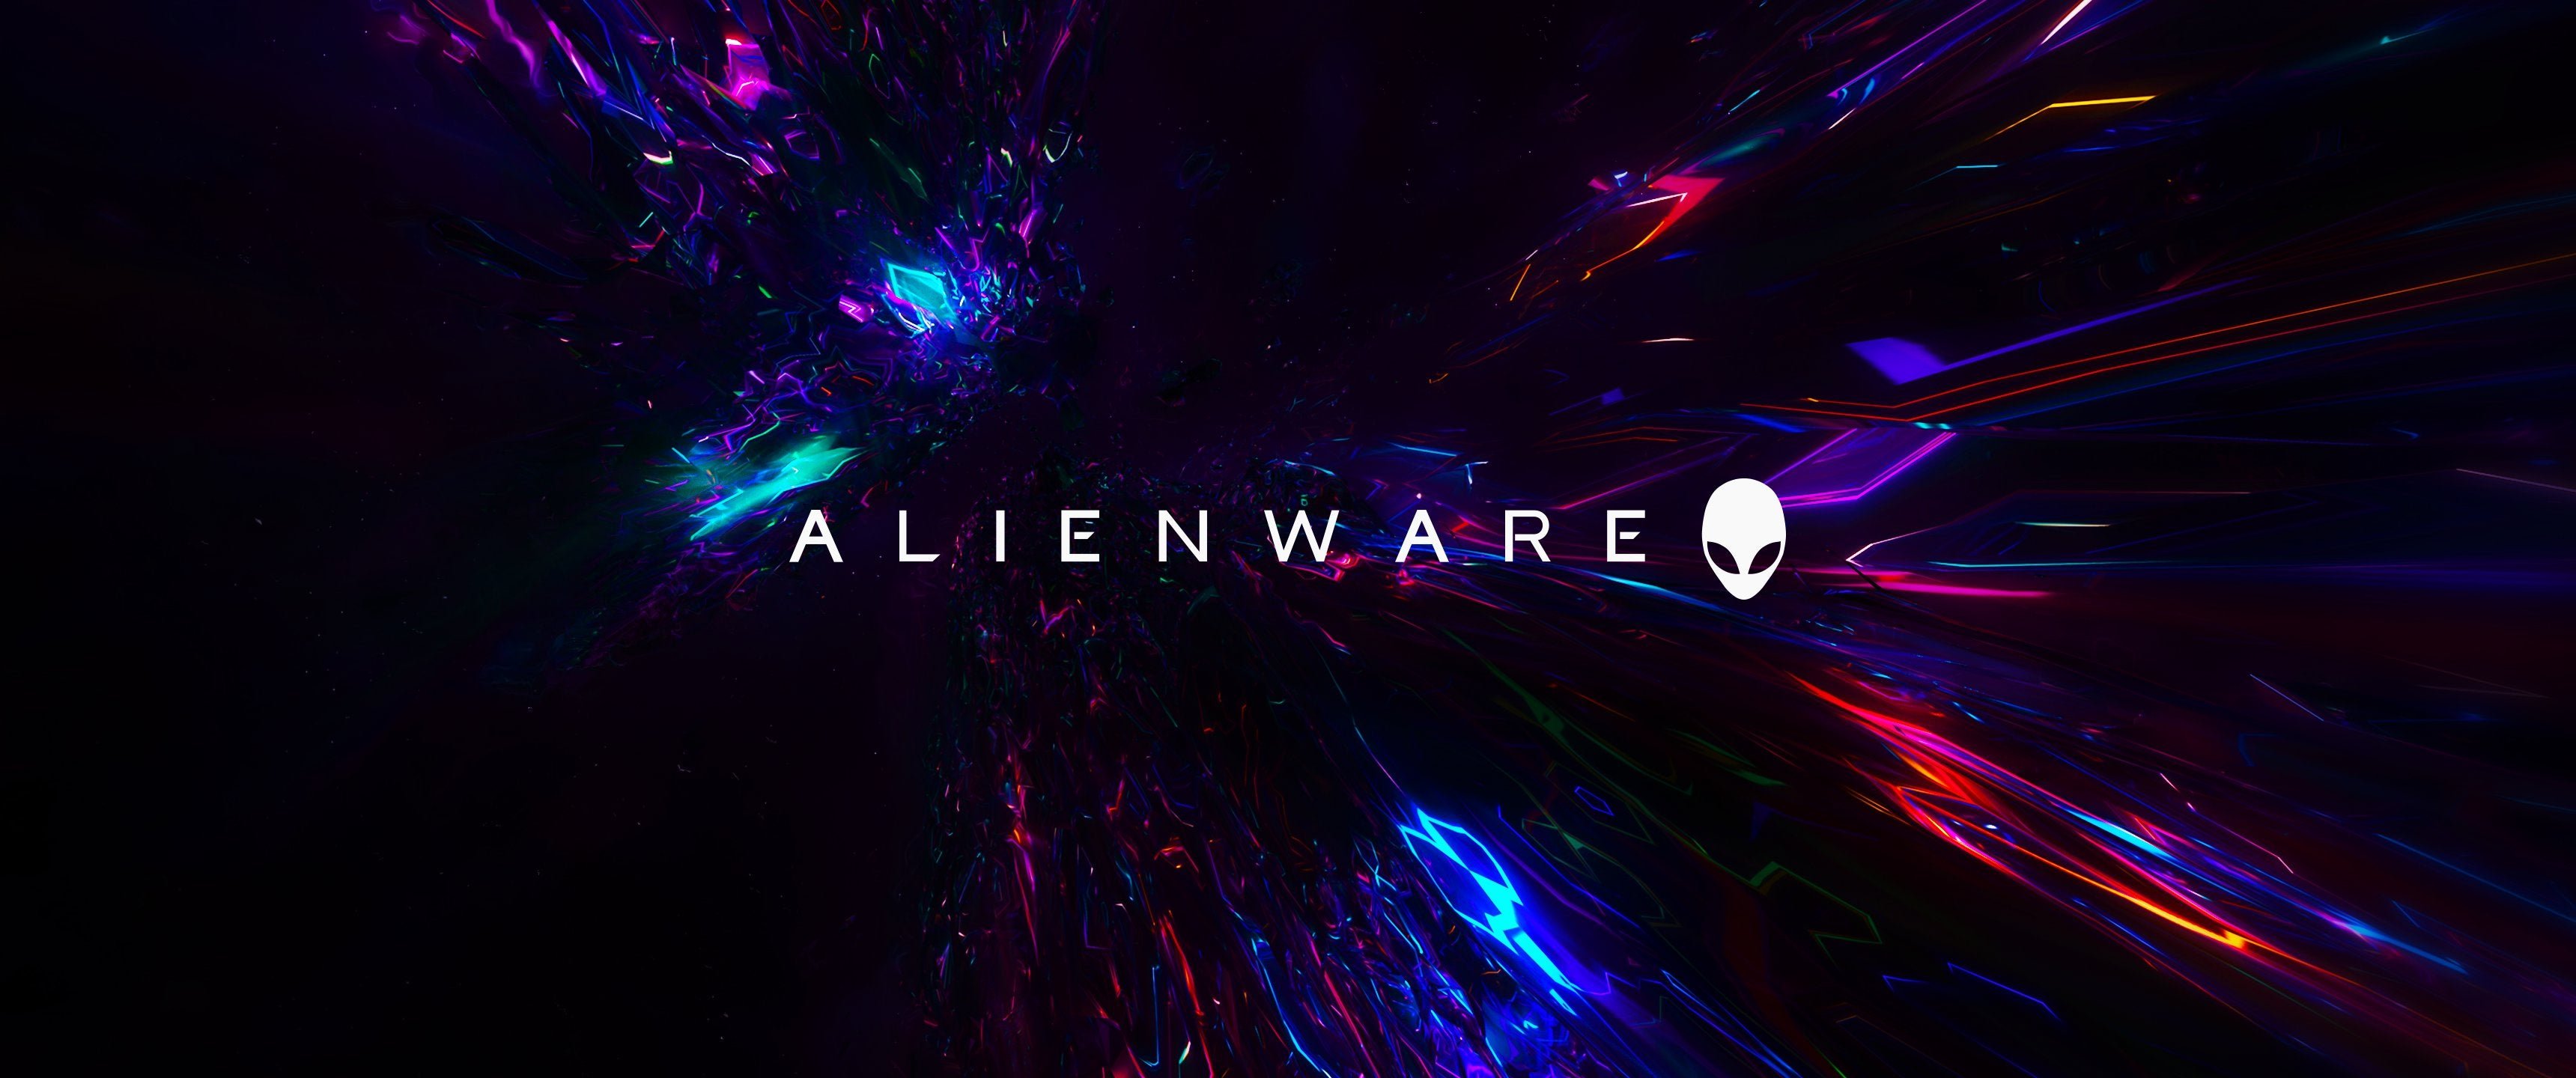 Alienware Ultrawide Wallpaper - carrotapp